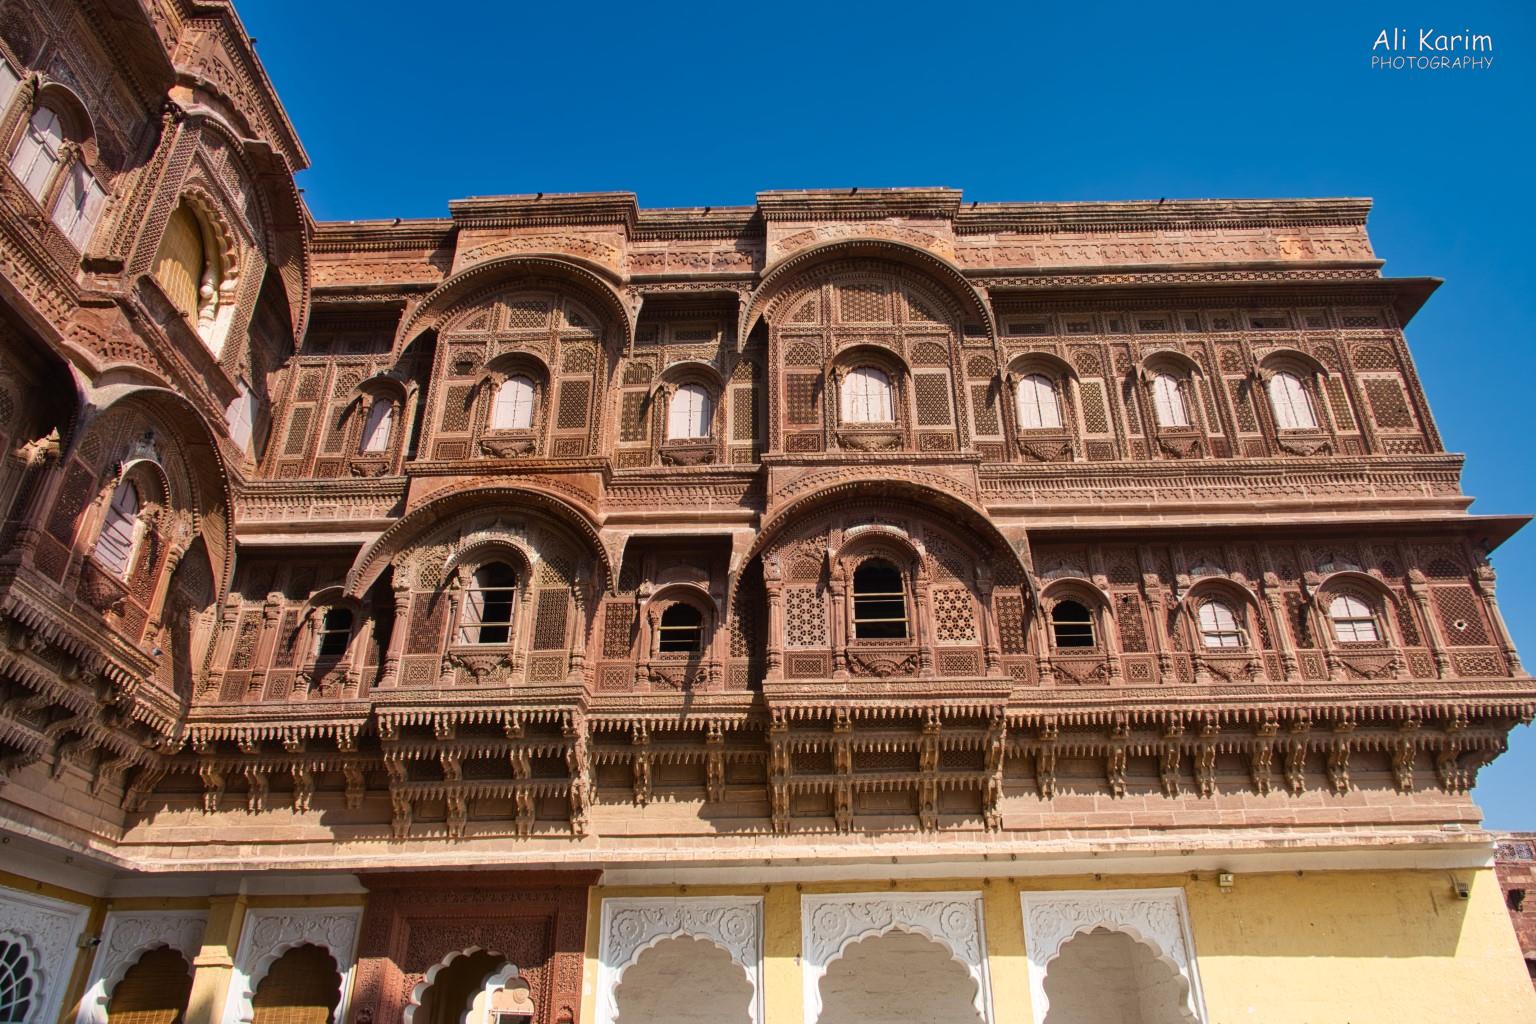 Jodhpur, Rajasthan One interior courtyard of the Mehranghar Fort/Palace